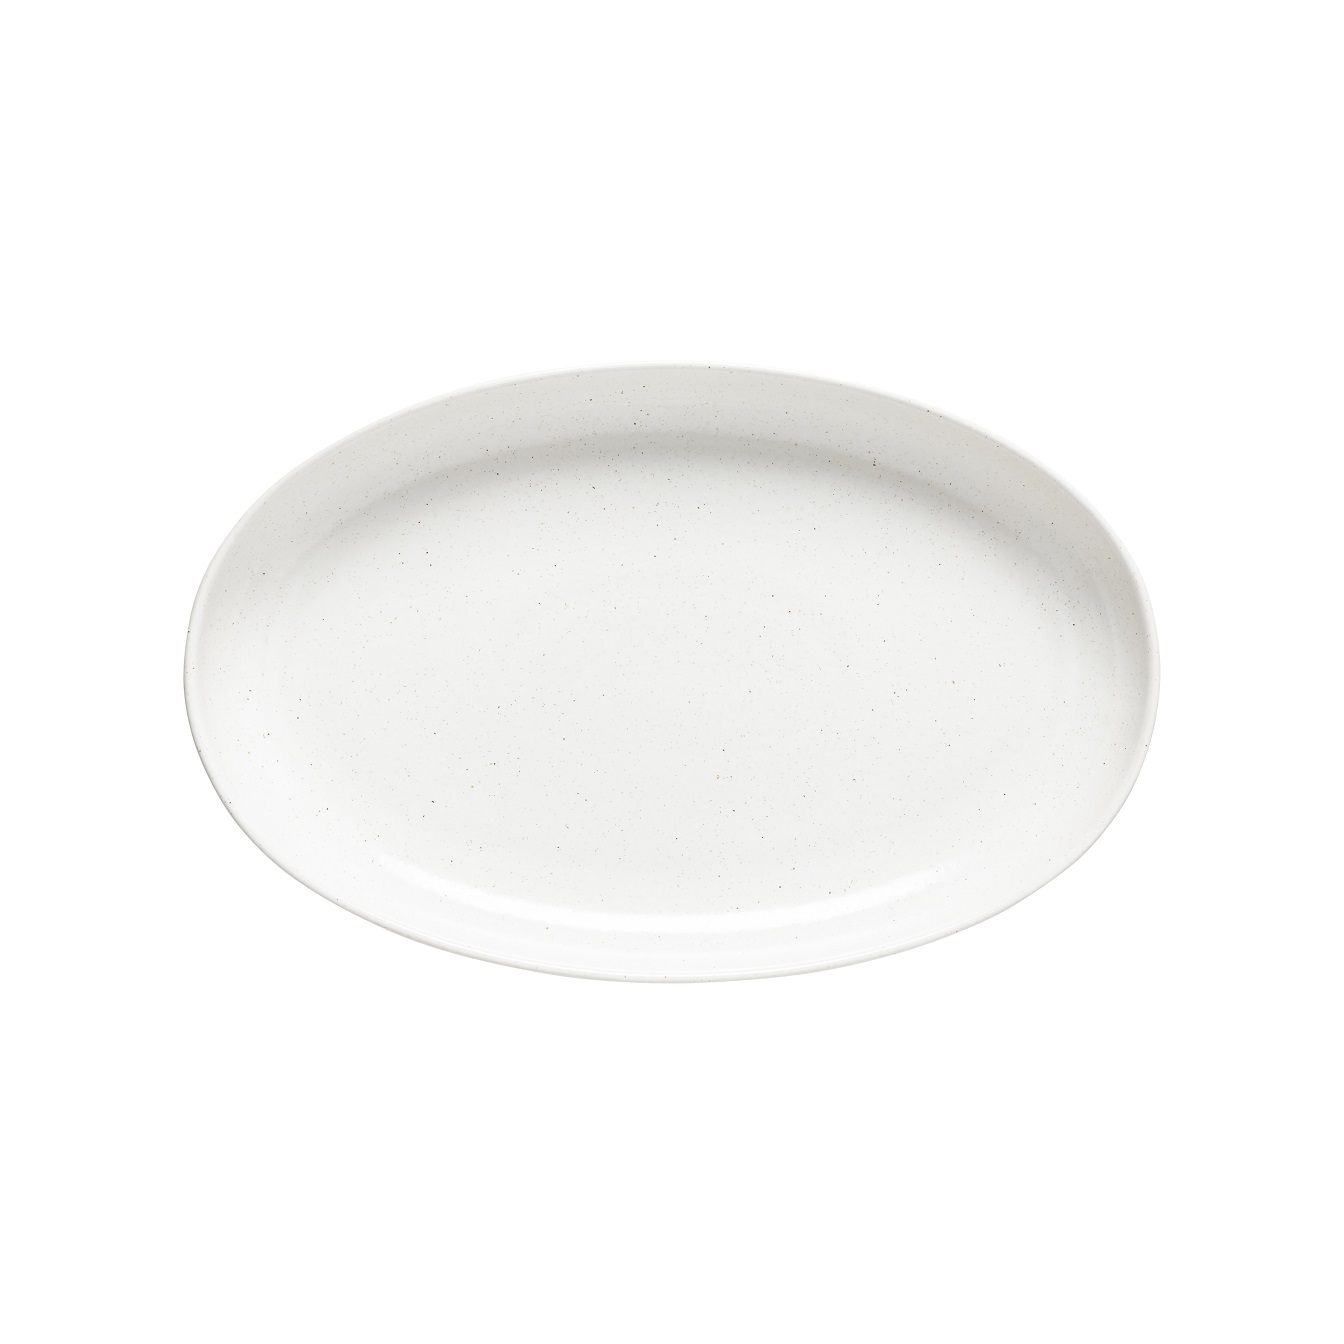 Pacifica Salt Oval Platter 32cm Gift